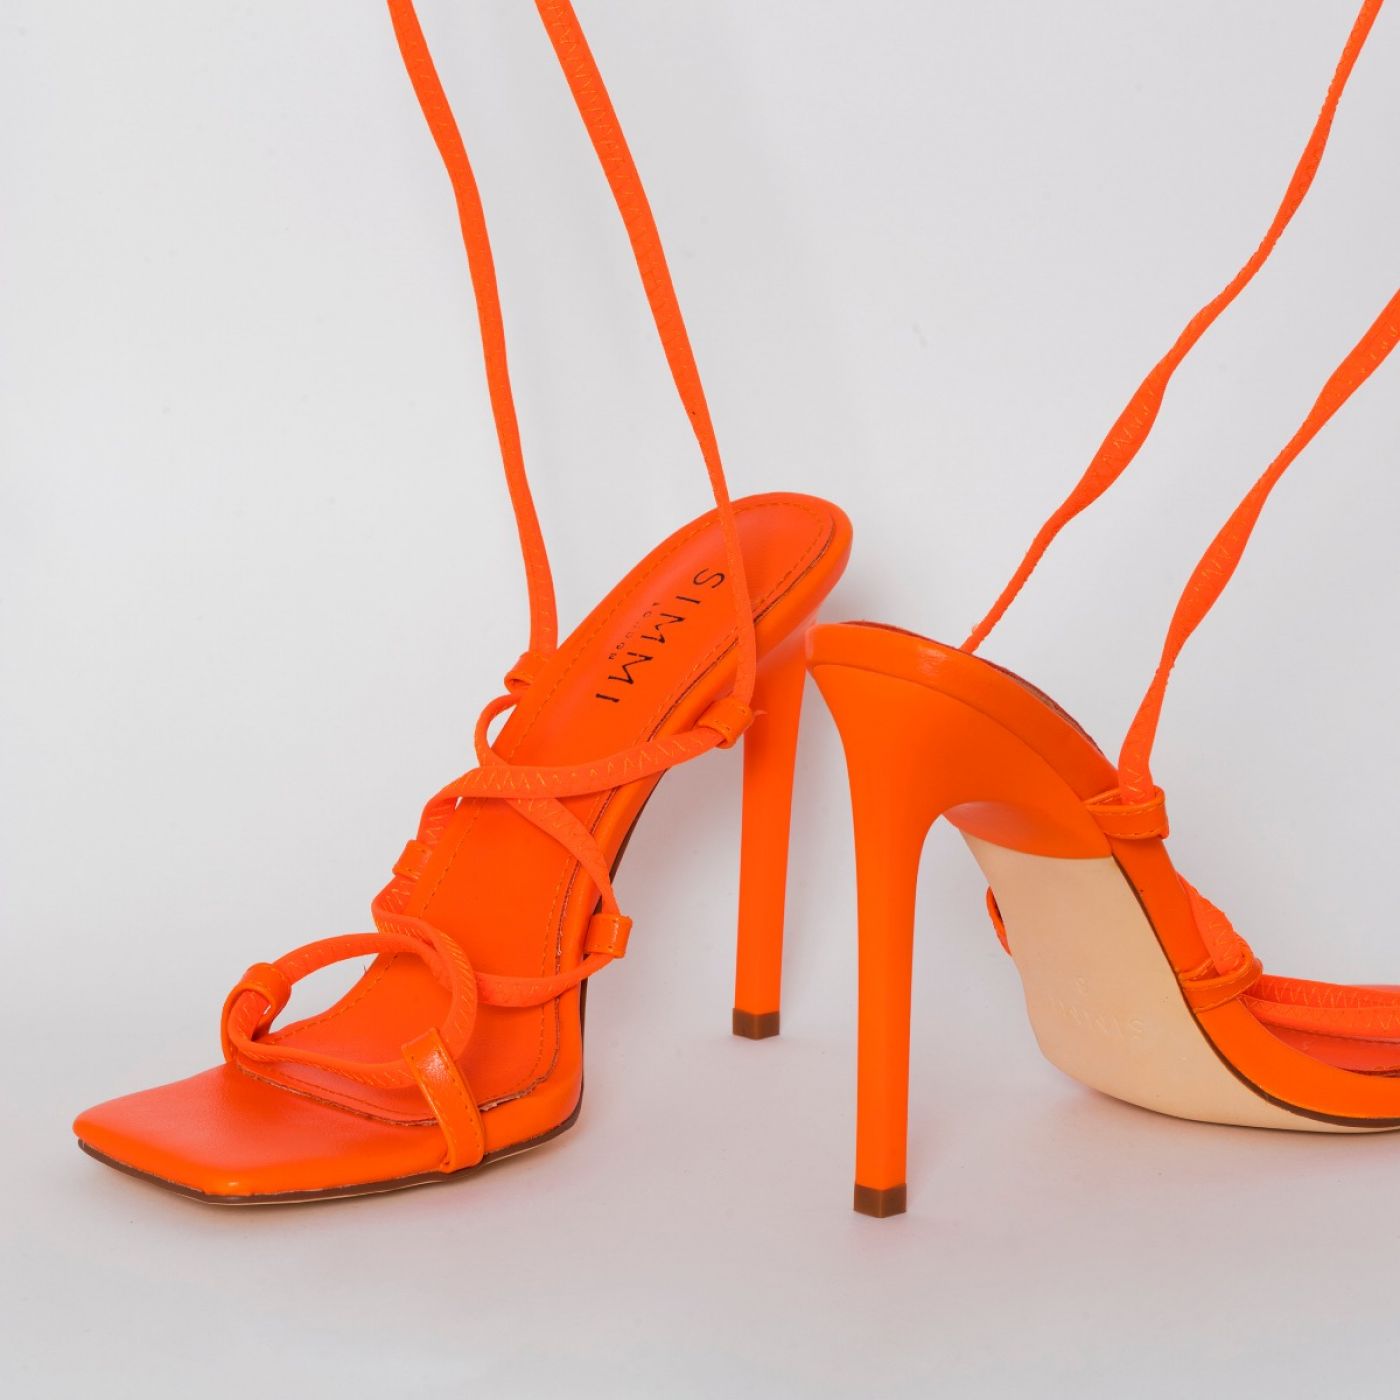 Clermont Twins Sis Neon Orange Lace Up Stiletto Heels